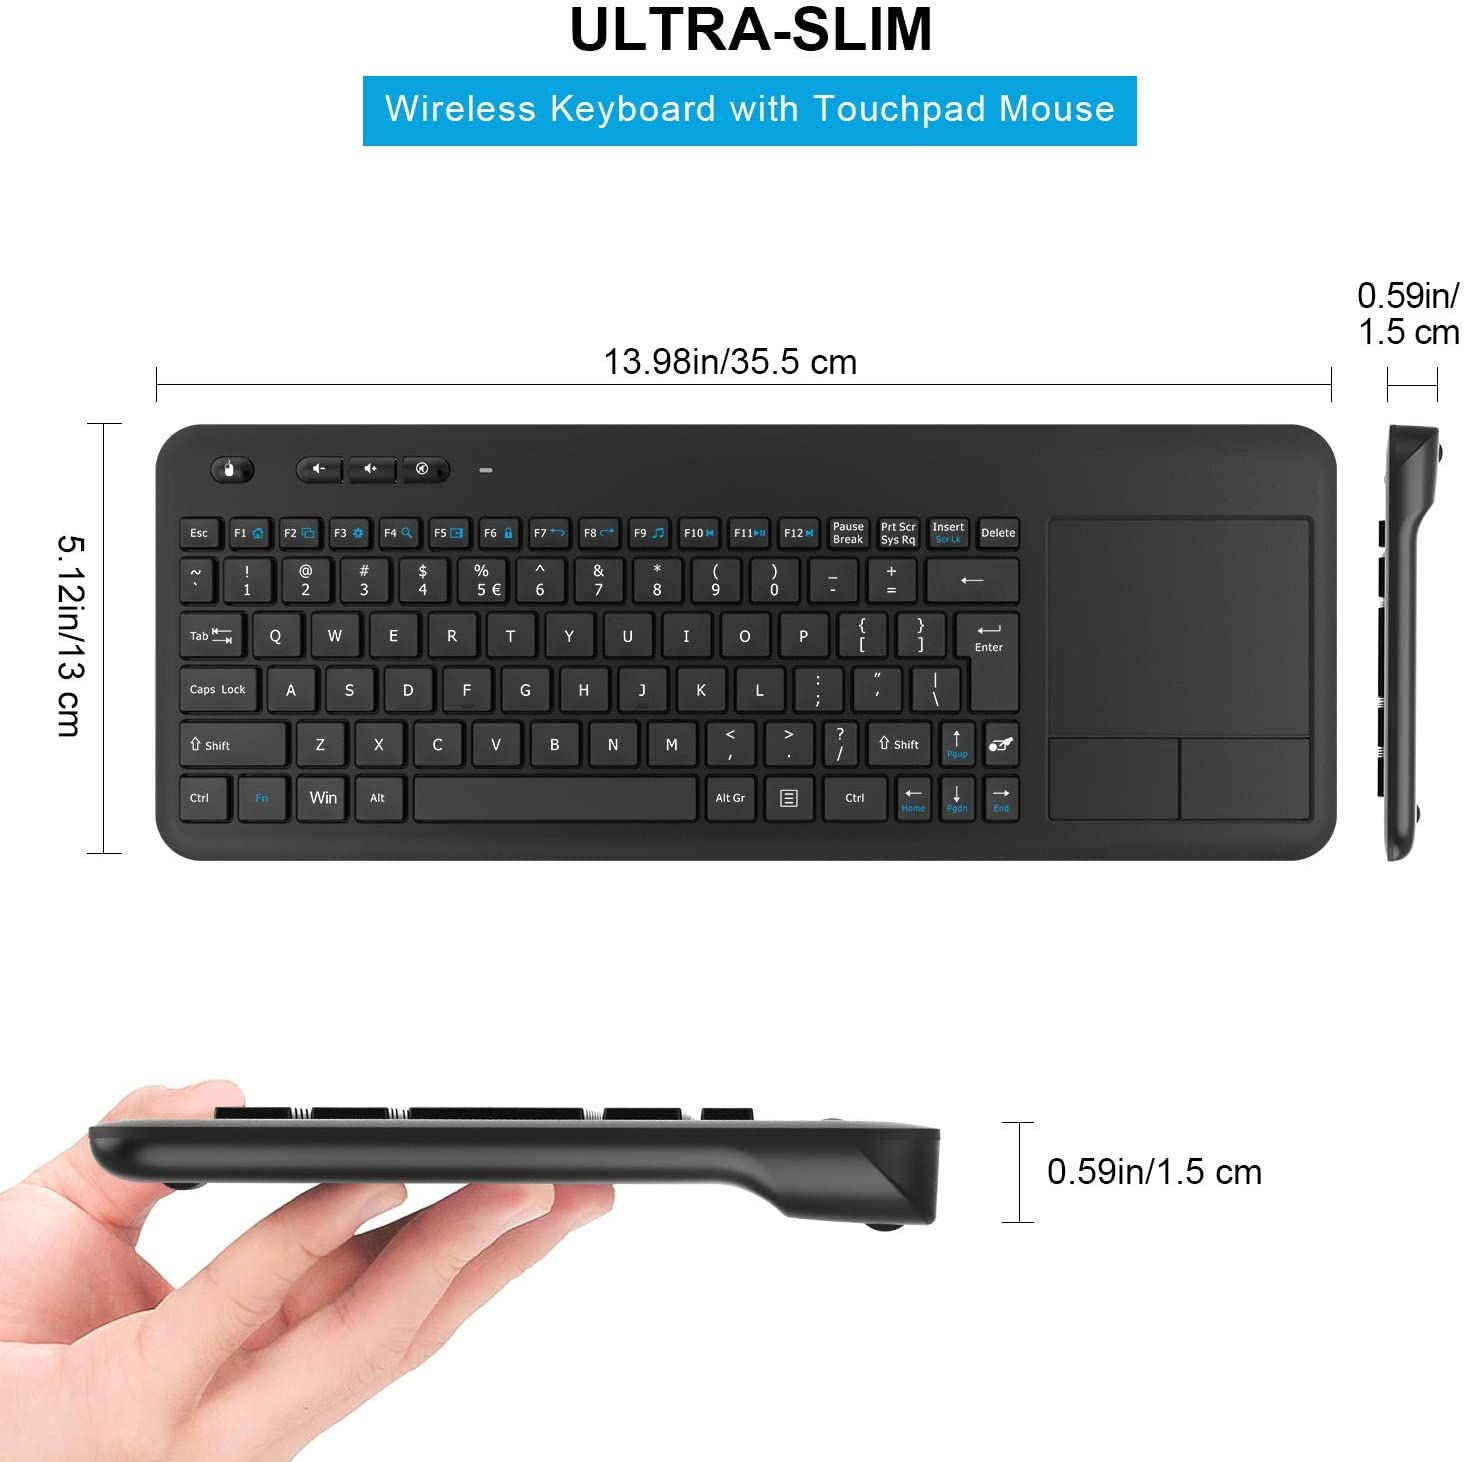 WisFox Wireless Touchpad Keyboard dimensions